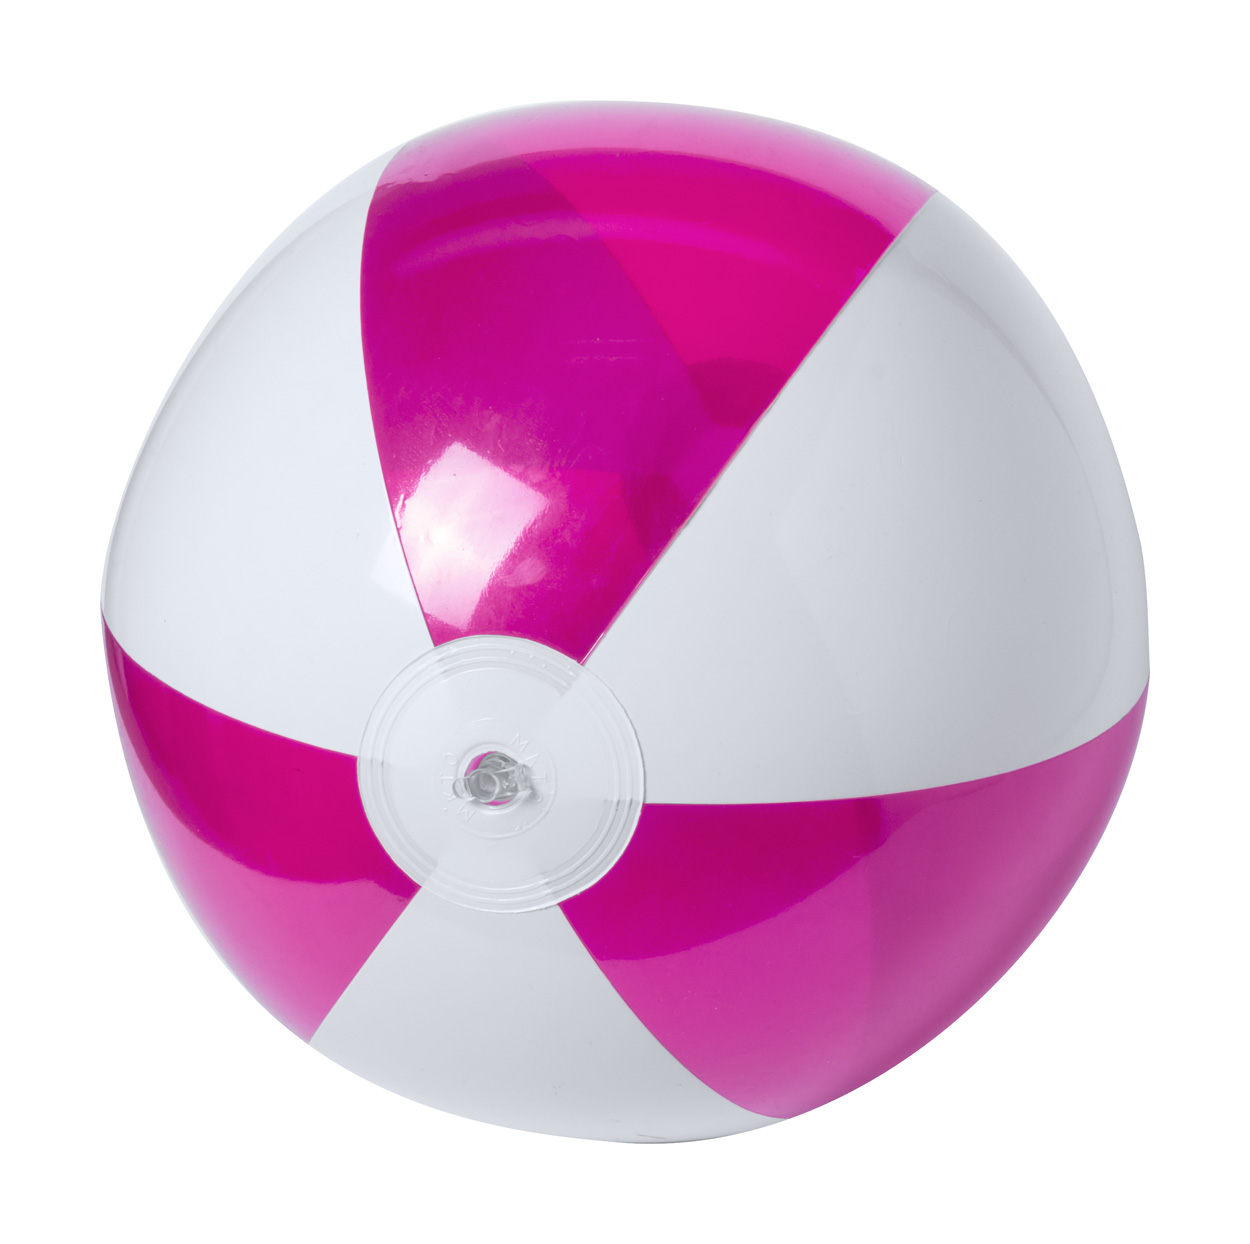 Inflatable beach ball ZEUSTY, diameter 28 cm